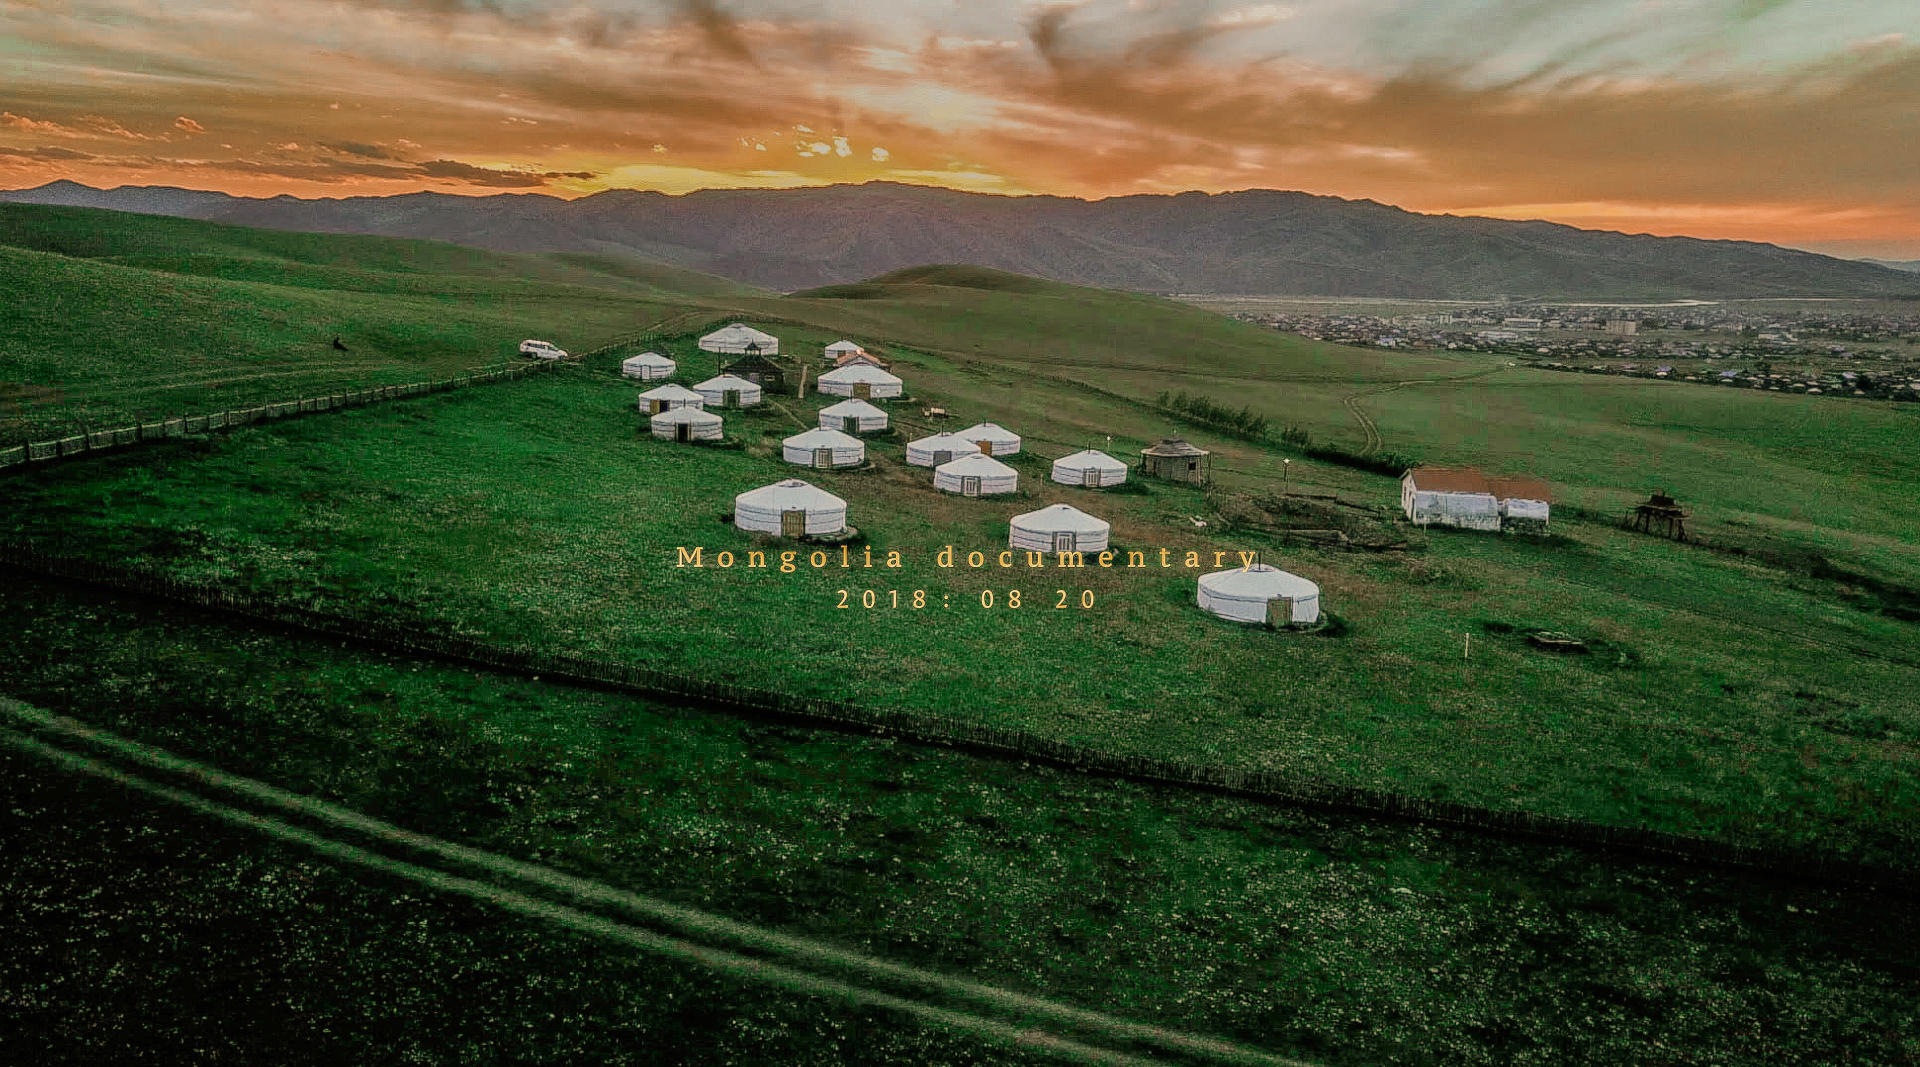 苍穹旷野- 蒙古国之旅 （Mongolia documentary）